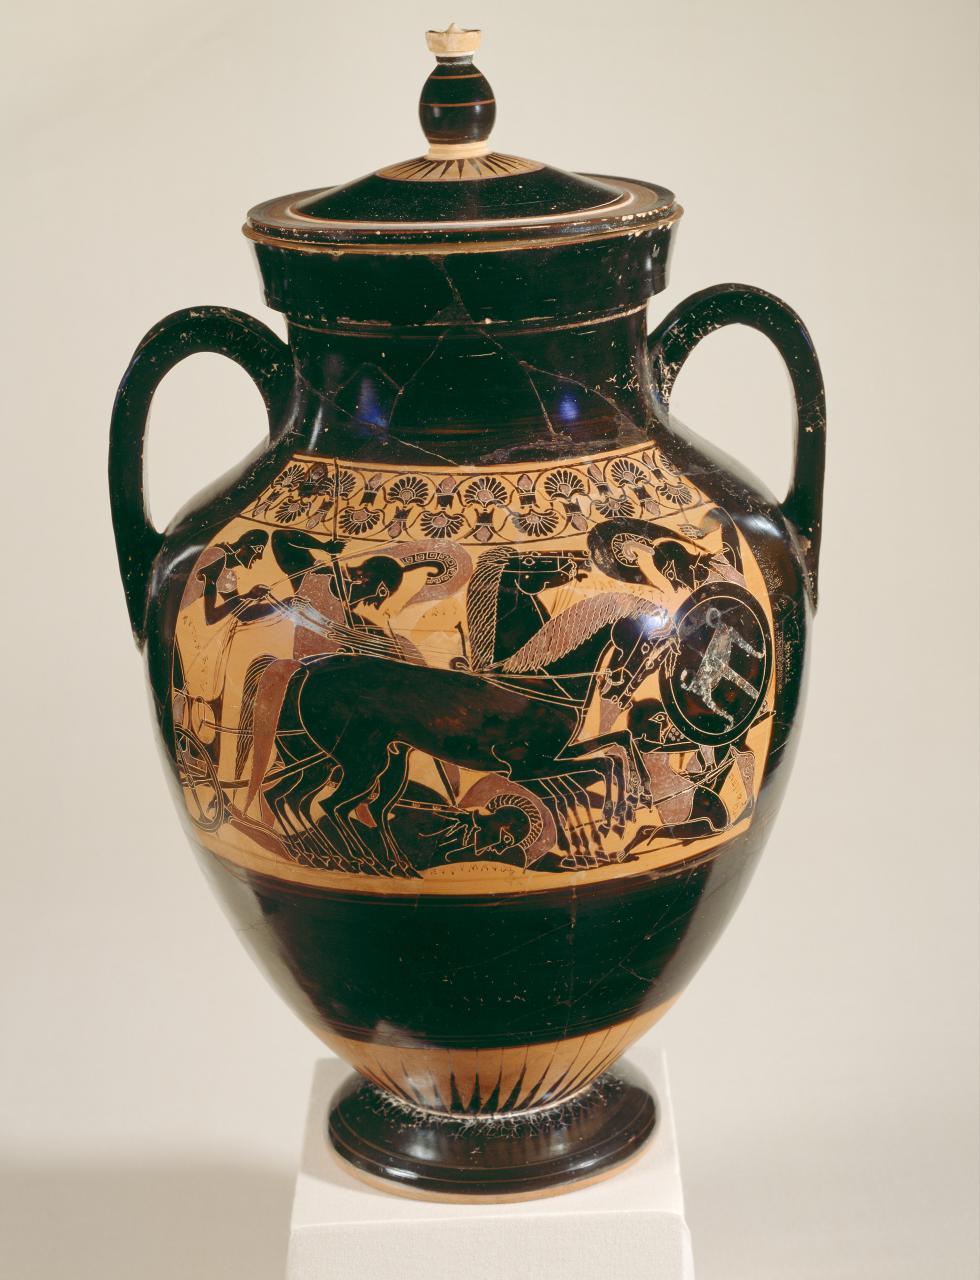 Image of Amphora